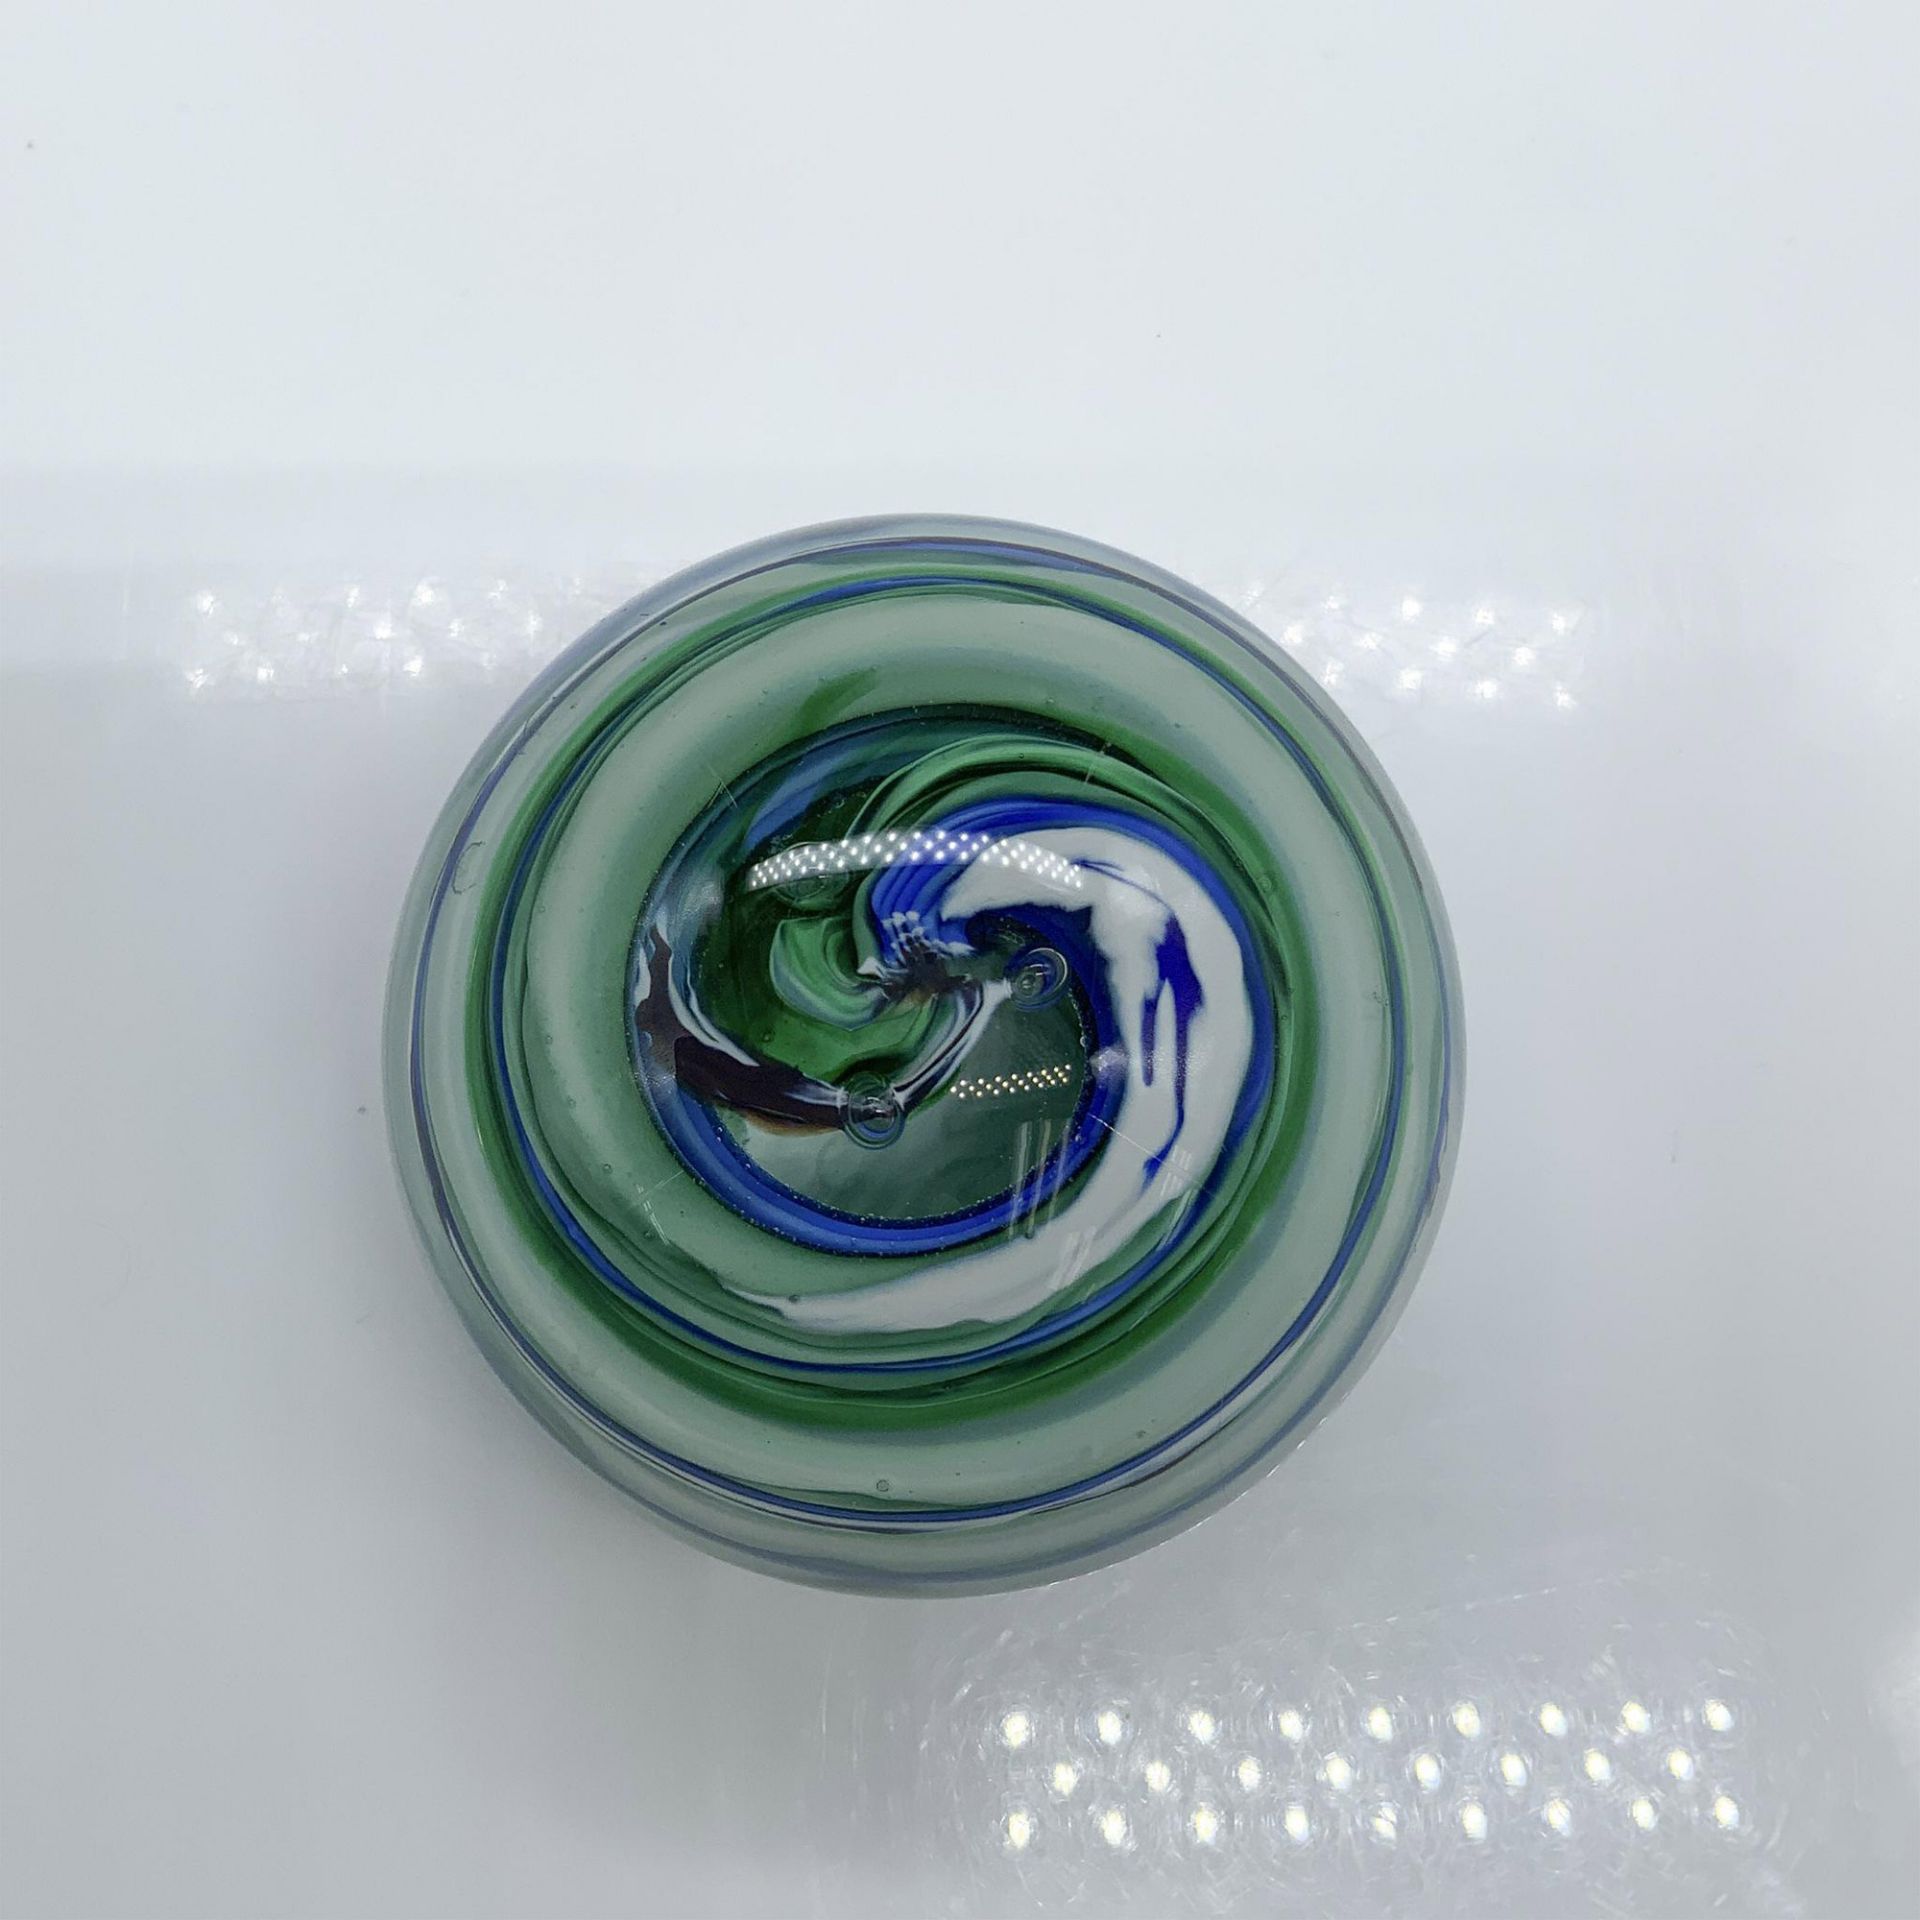 Murano Glass Blue & Green Swirl Paperweight, Signed - Image 2 of 4